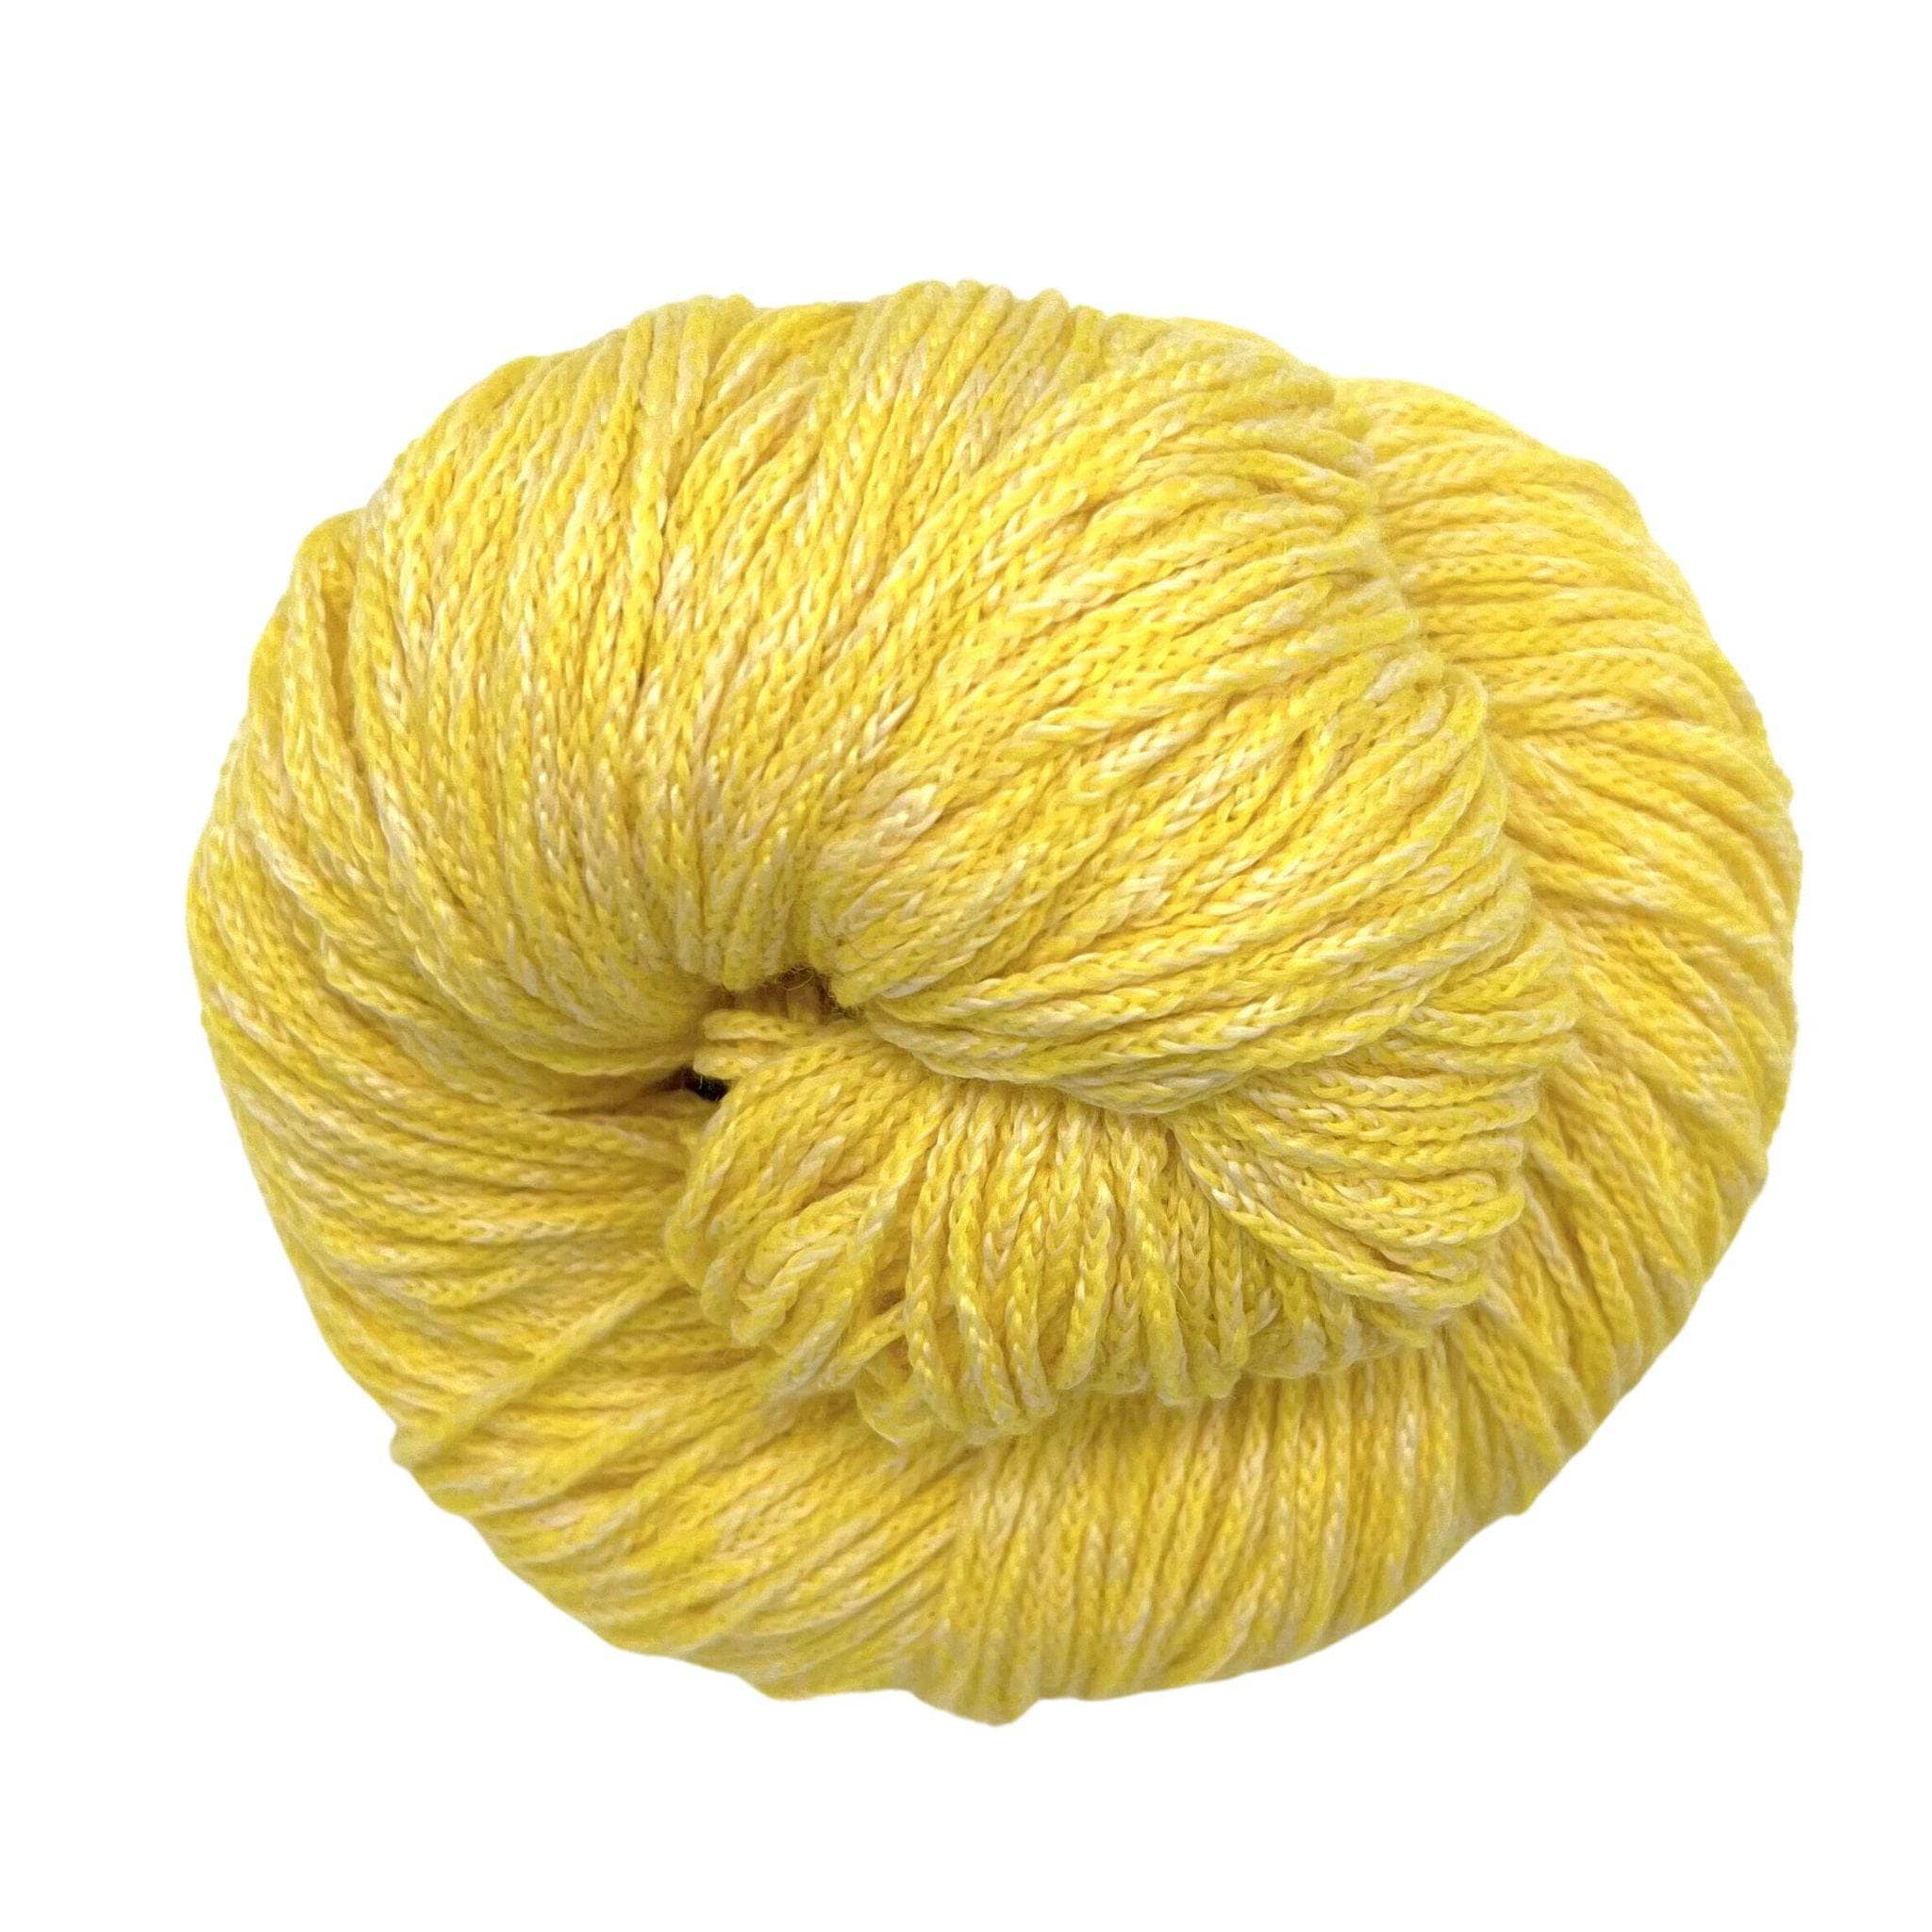 Merino wool yarn  Get the softest, quality merino wool yarn here!